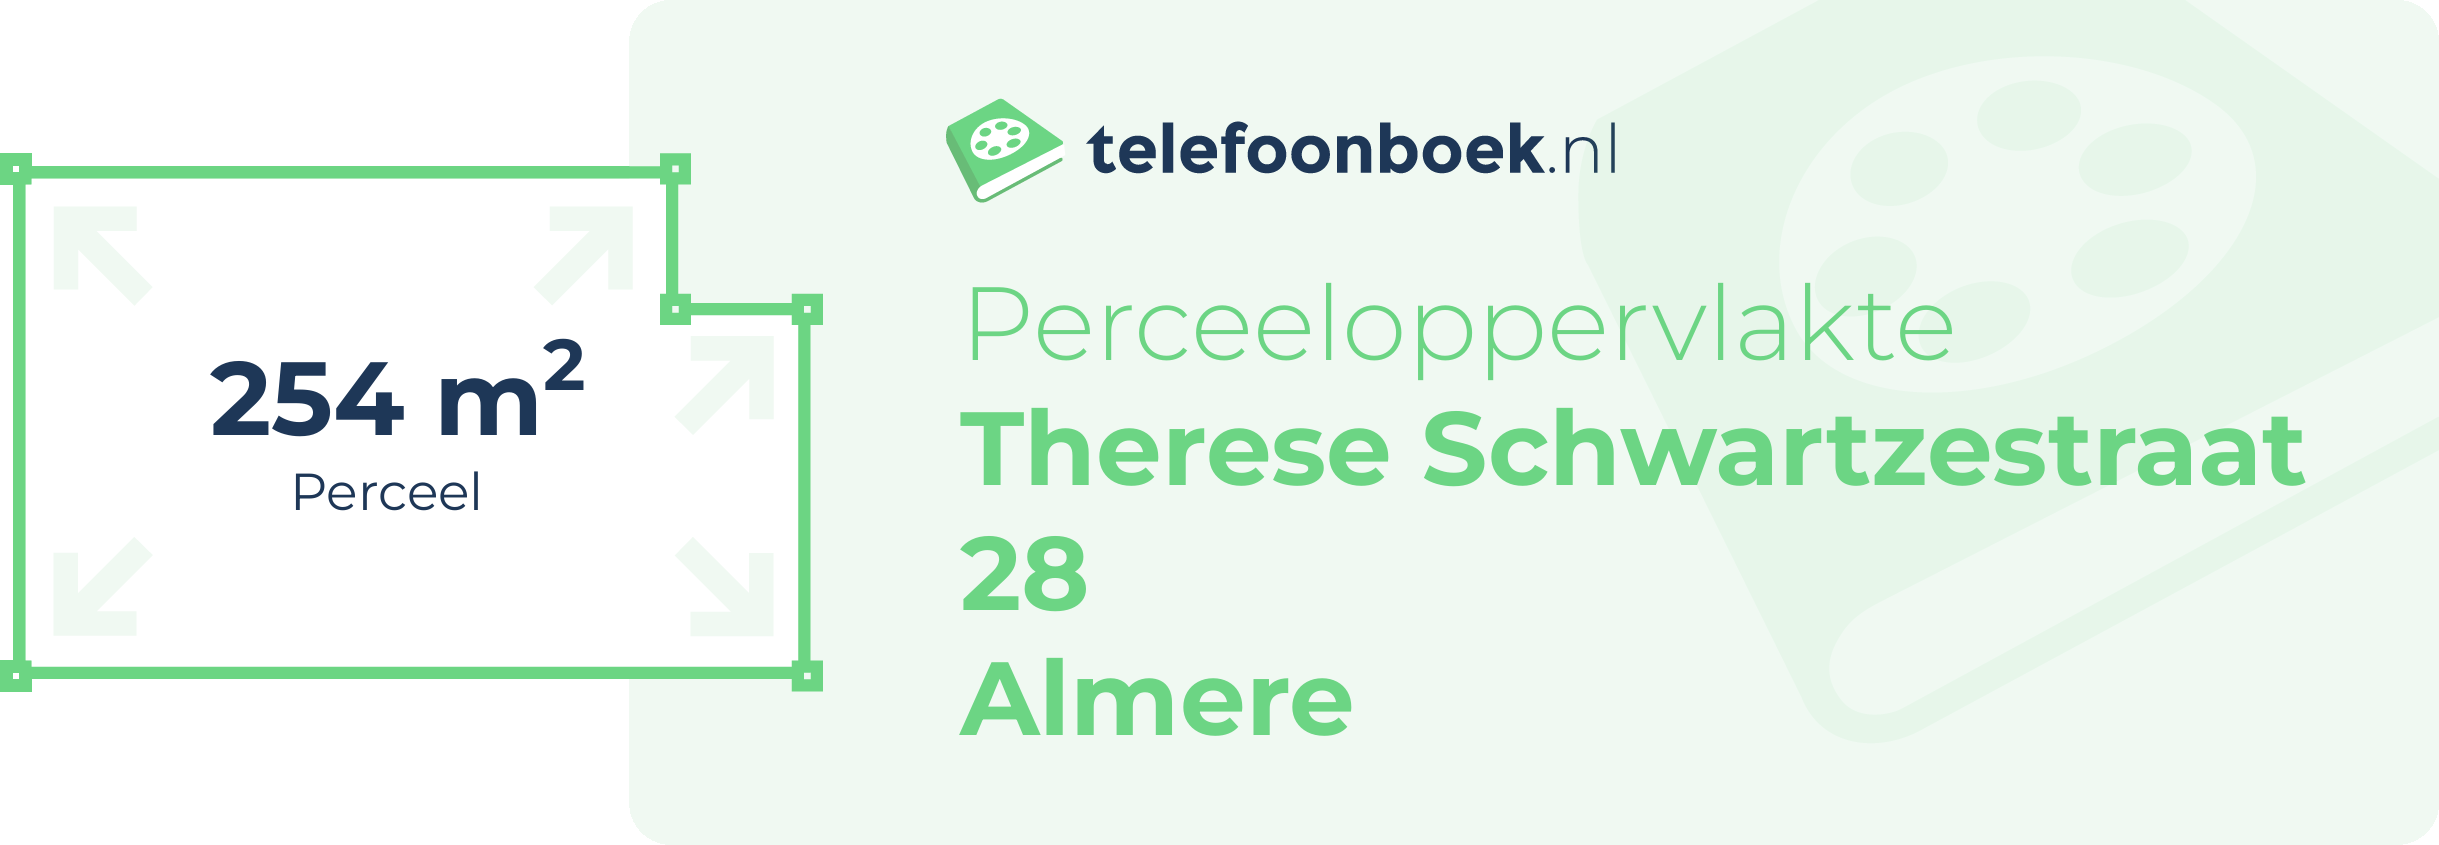 Perceeloppervlakte Therese Schwartzestraat 28 Almere